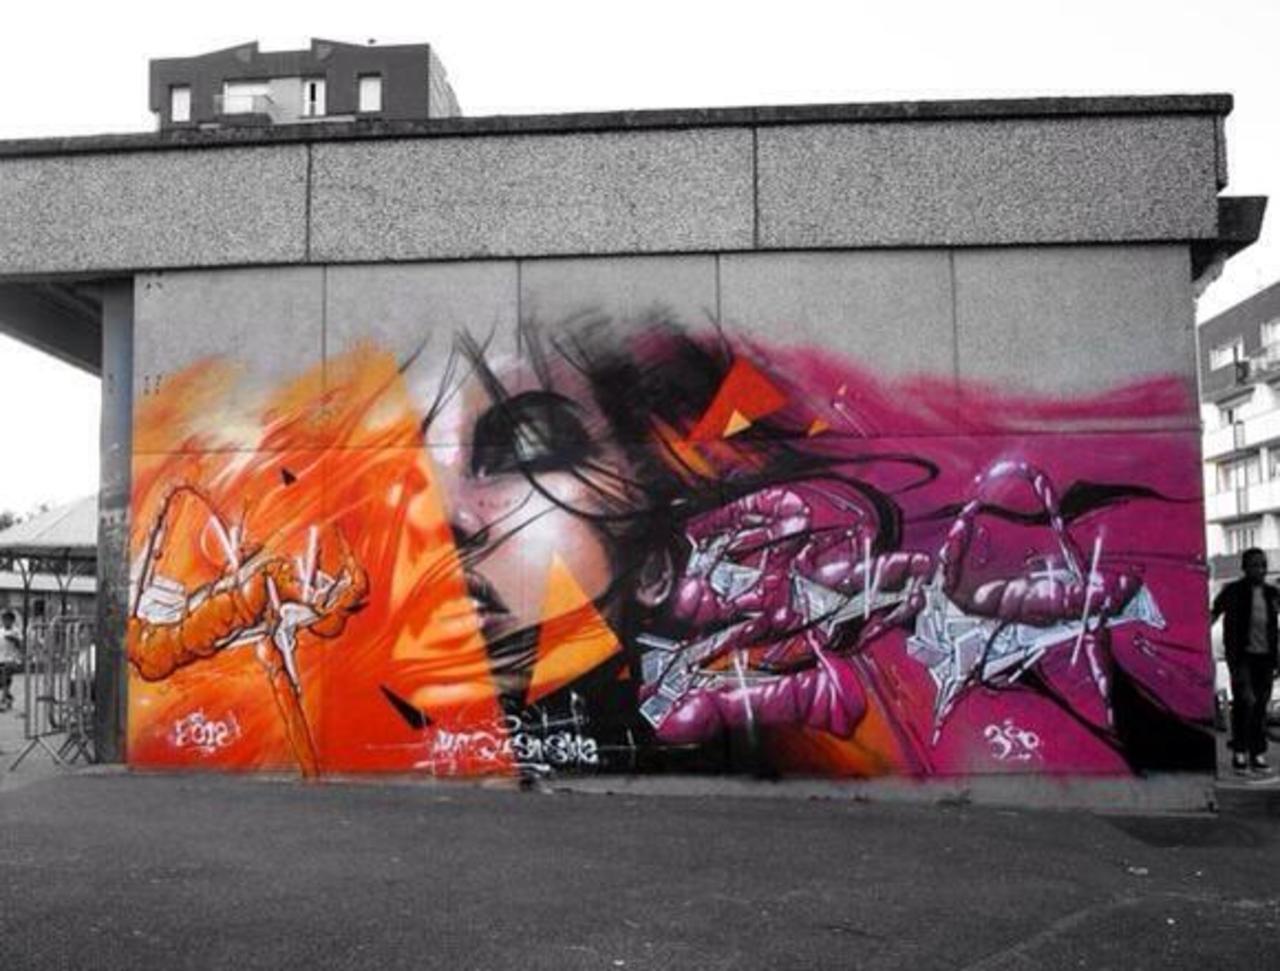 RT @designopinion: Colab of Sly2, Kat, Quesa Street Art wall in Paris, France #art #mural #graffiti #streetart http://t.co/7i0YnwGR10